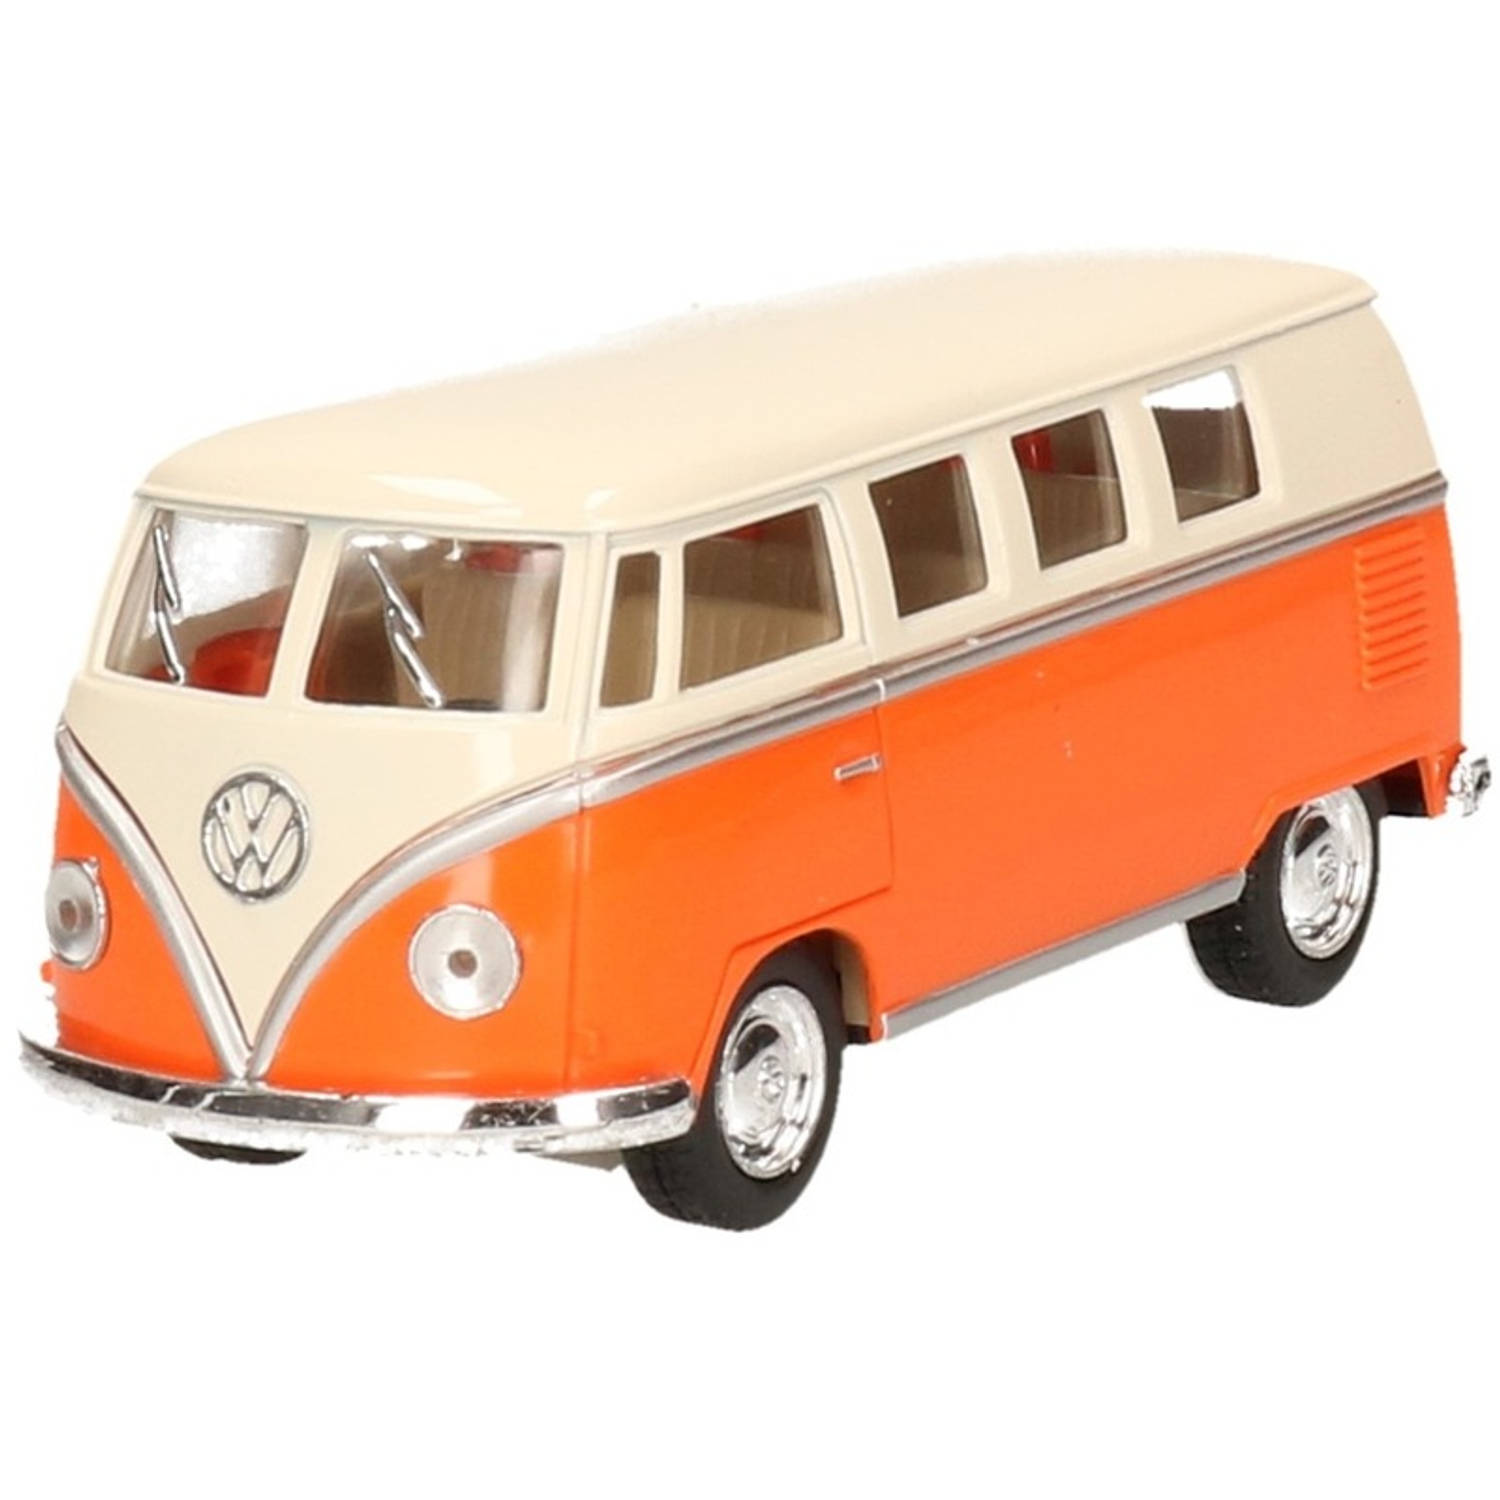 Modelauto Volkswagen T1 Two-tone Oranje-wit 13,5 Cm Speelgoed Auto Schaalmodel Miniatuur Model